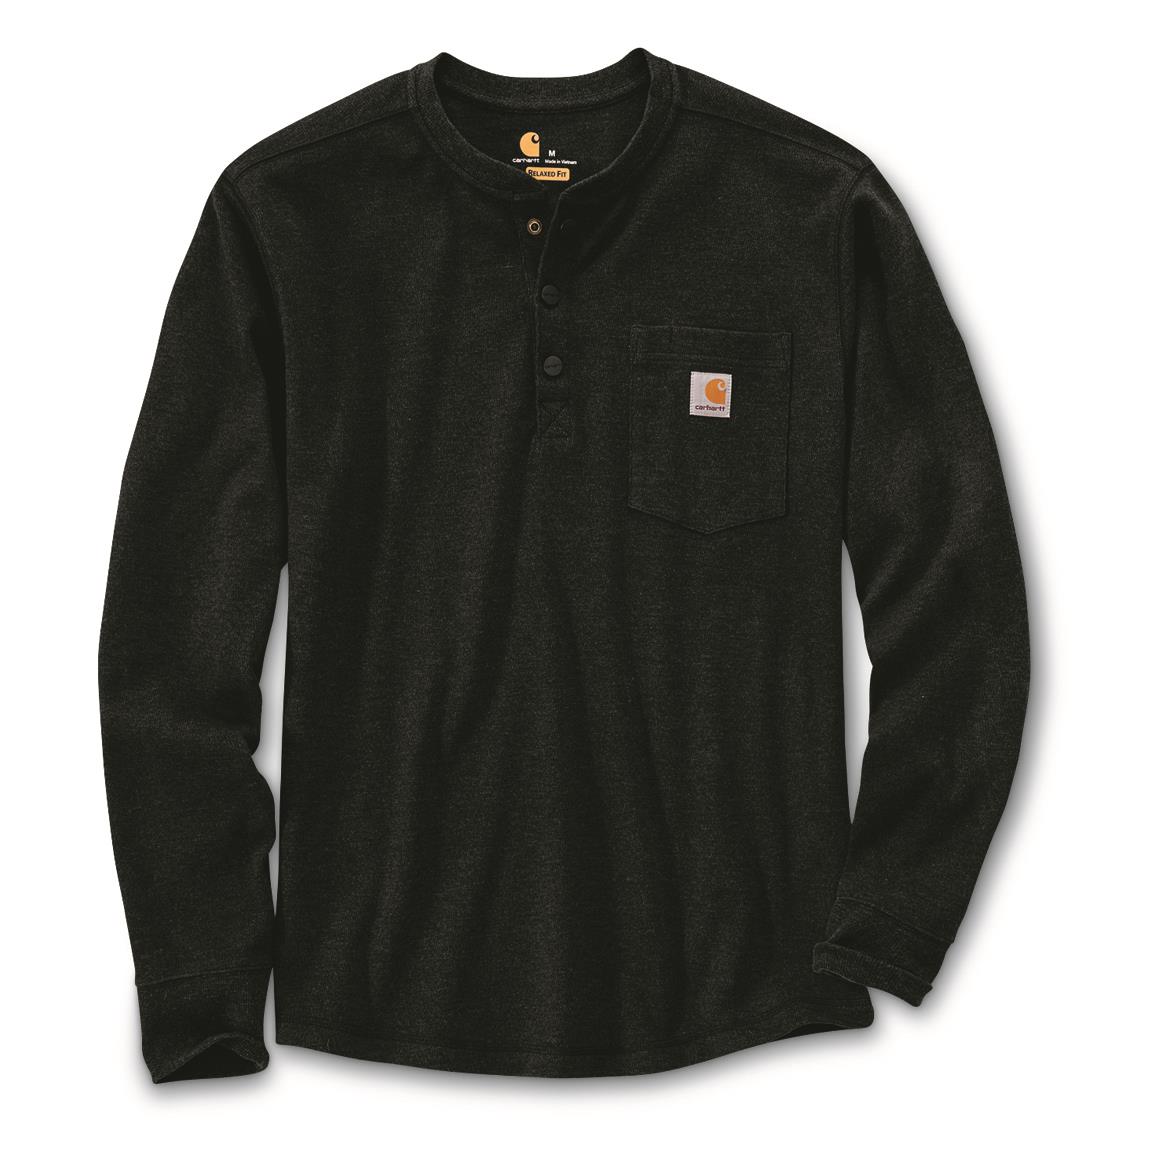 Carhartt Men's Thermal Pocket Henley Shirt, Black